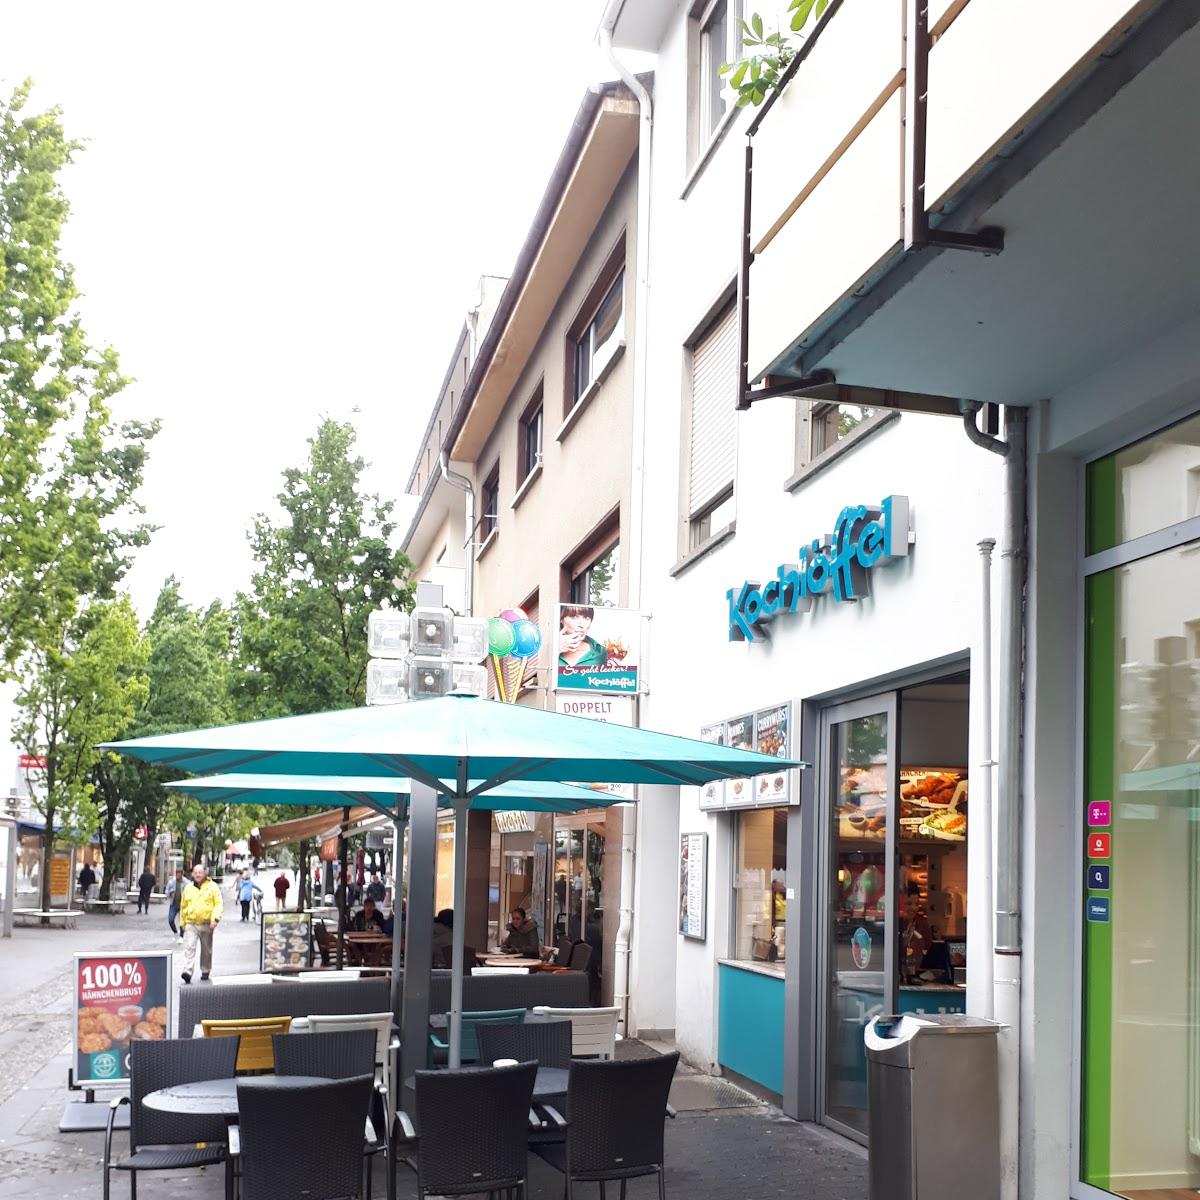 Restaurant "Kochlöffel" in  Frankenthal